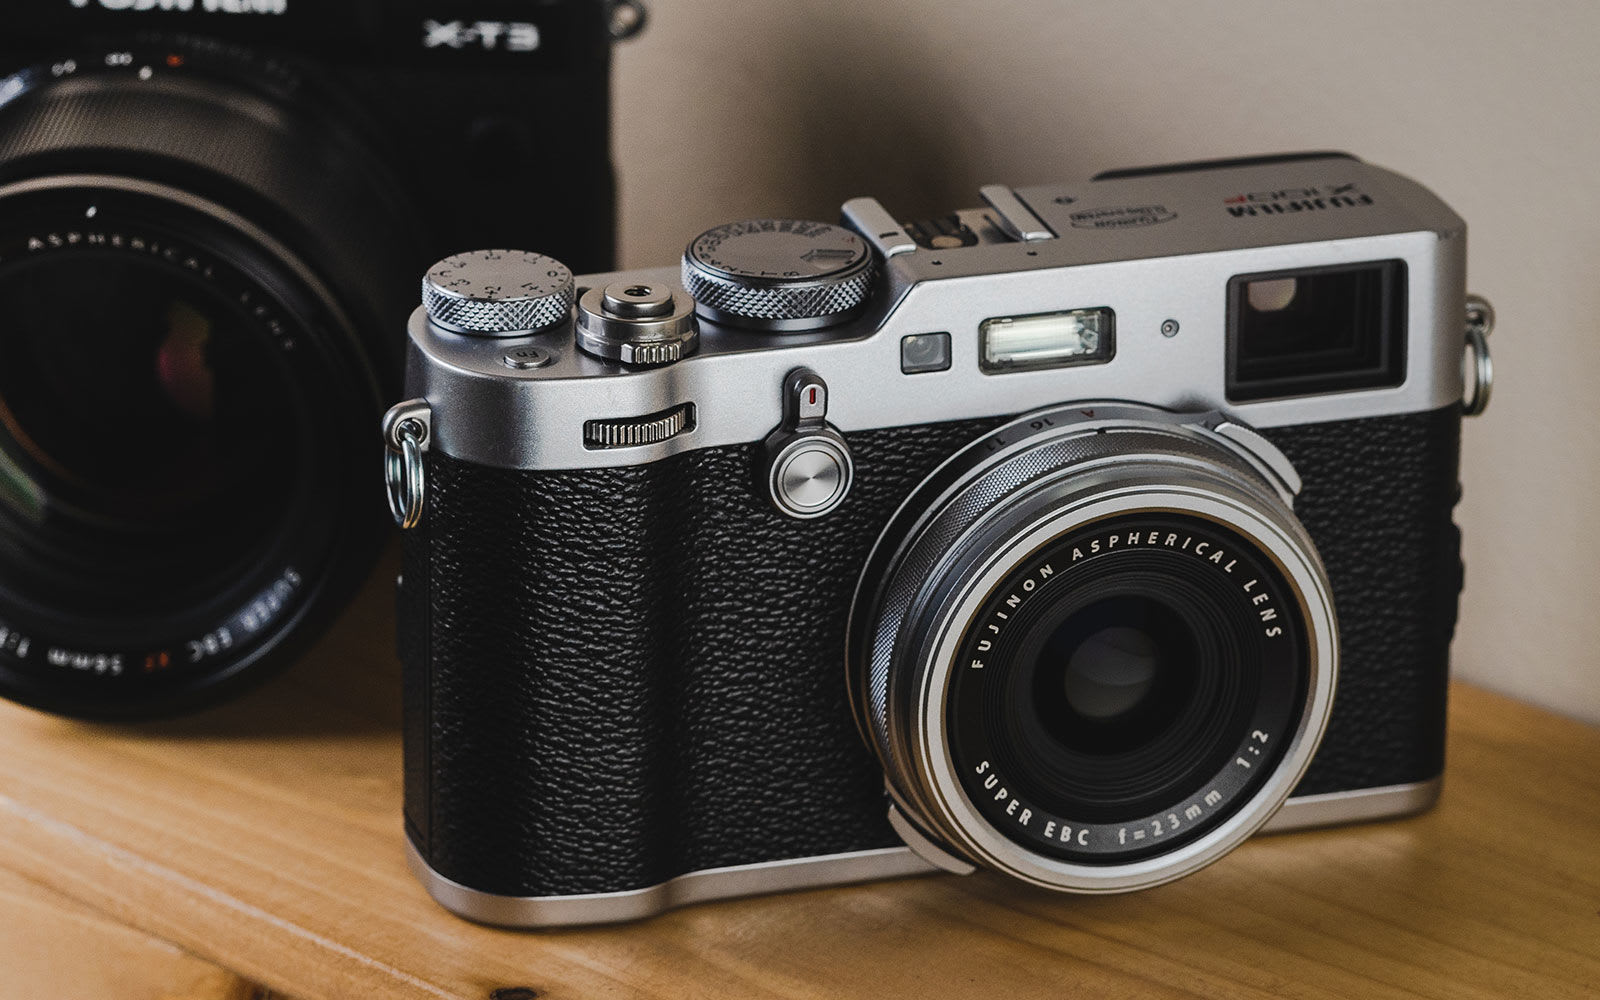 Fujifilm X100F compact camera for street photos